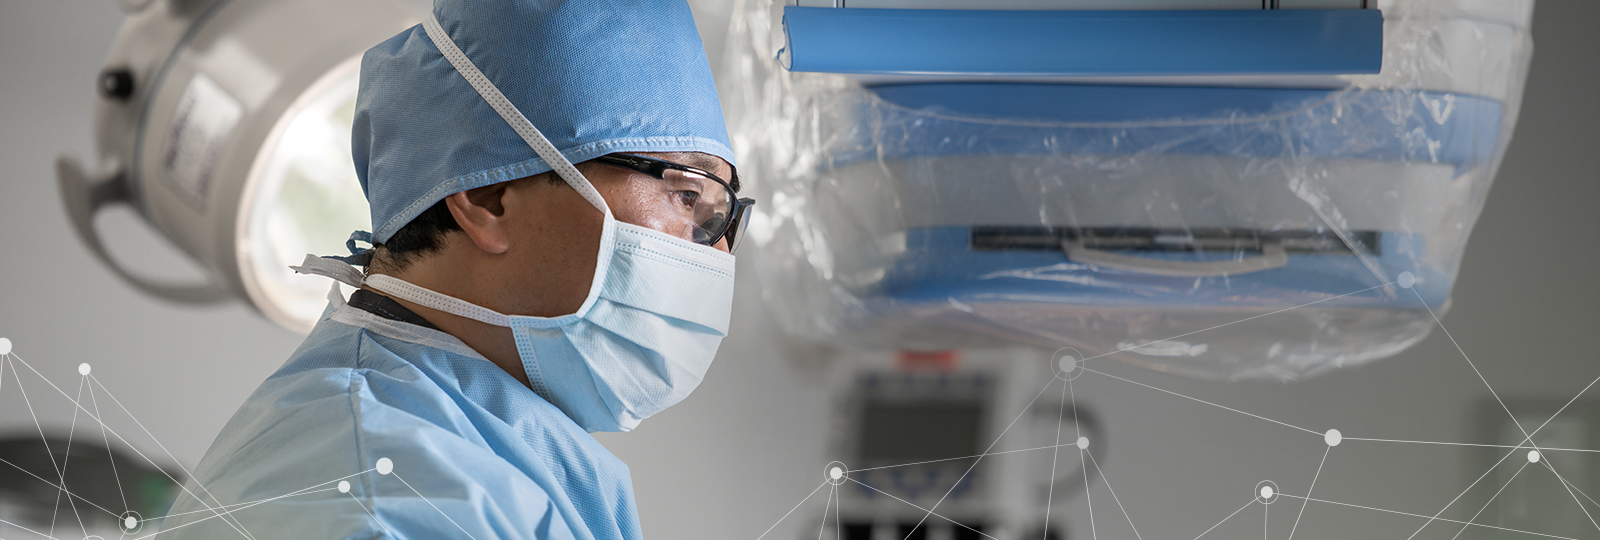 Electrophysiologist implanting a cardiac device.